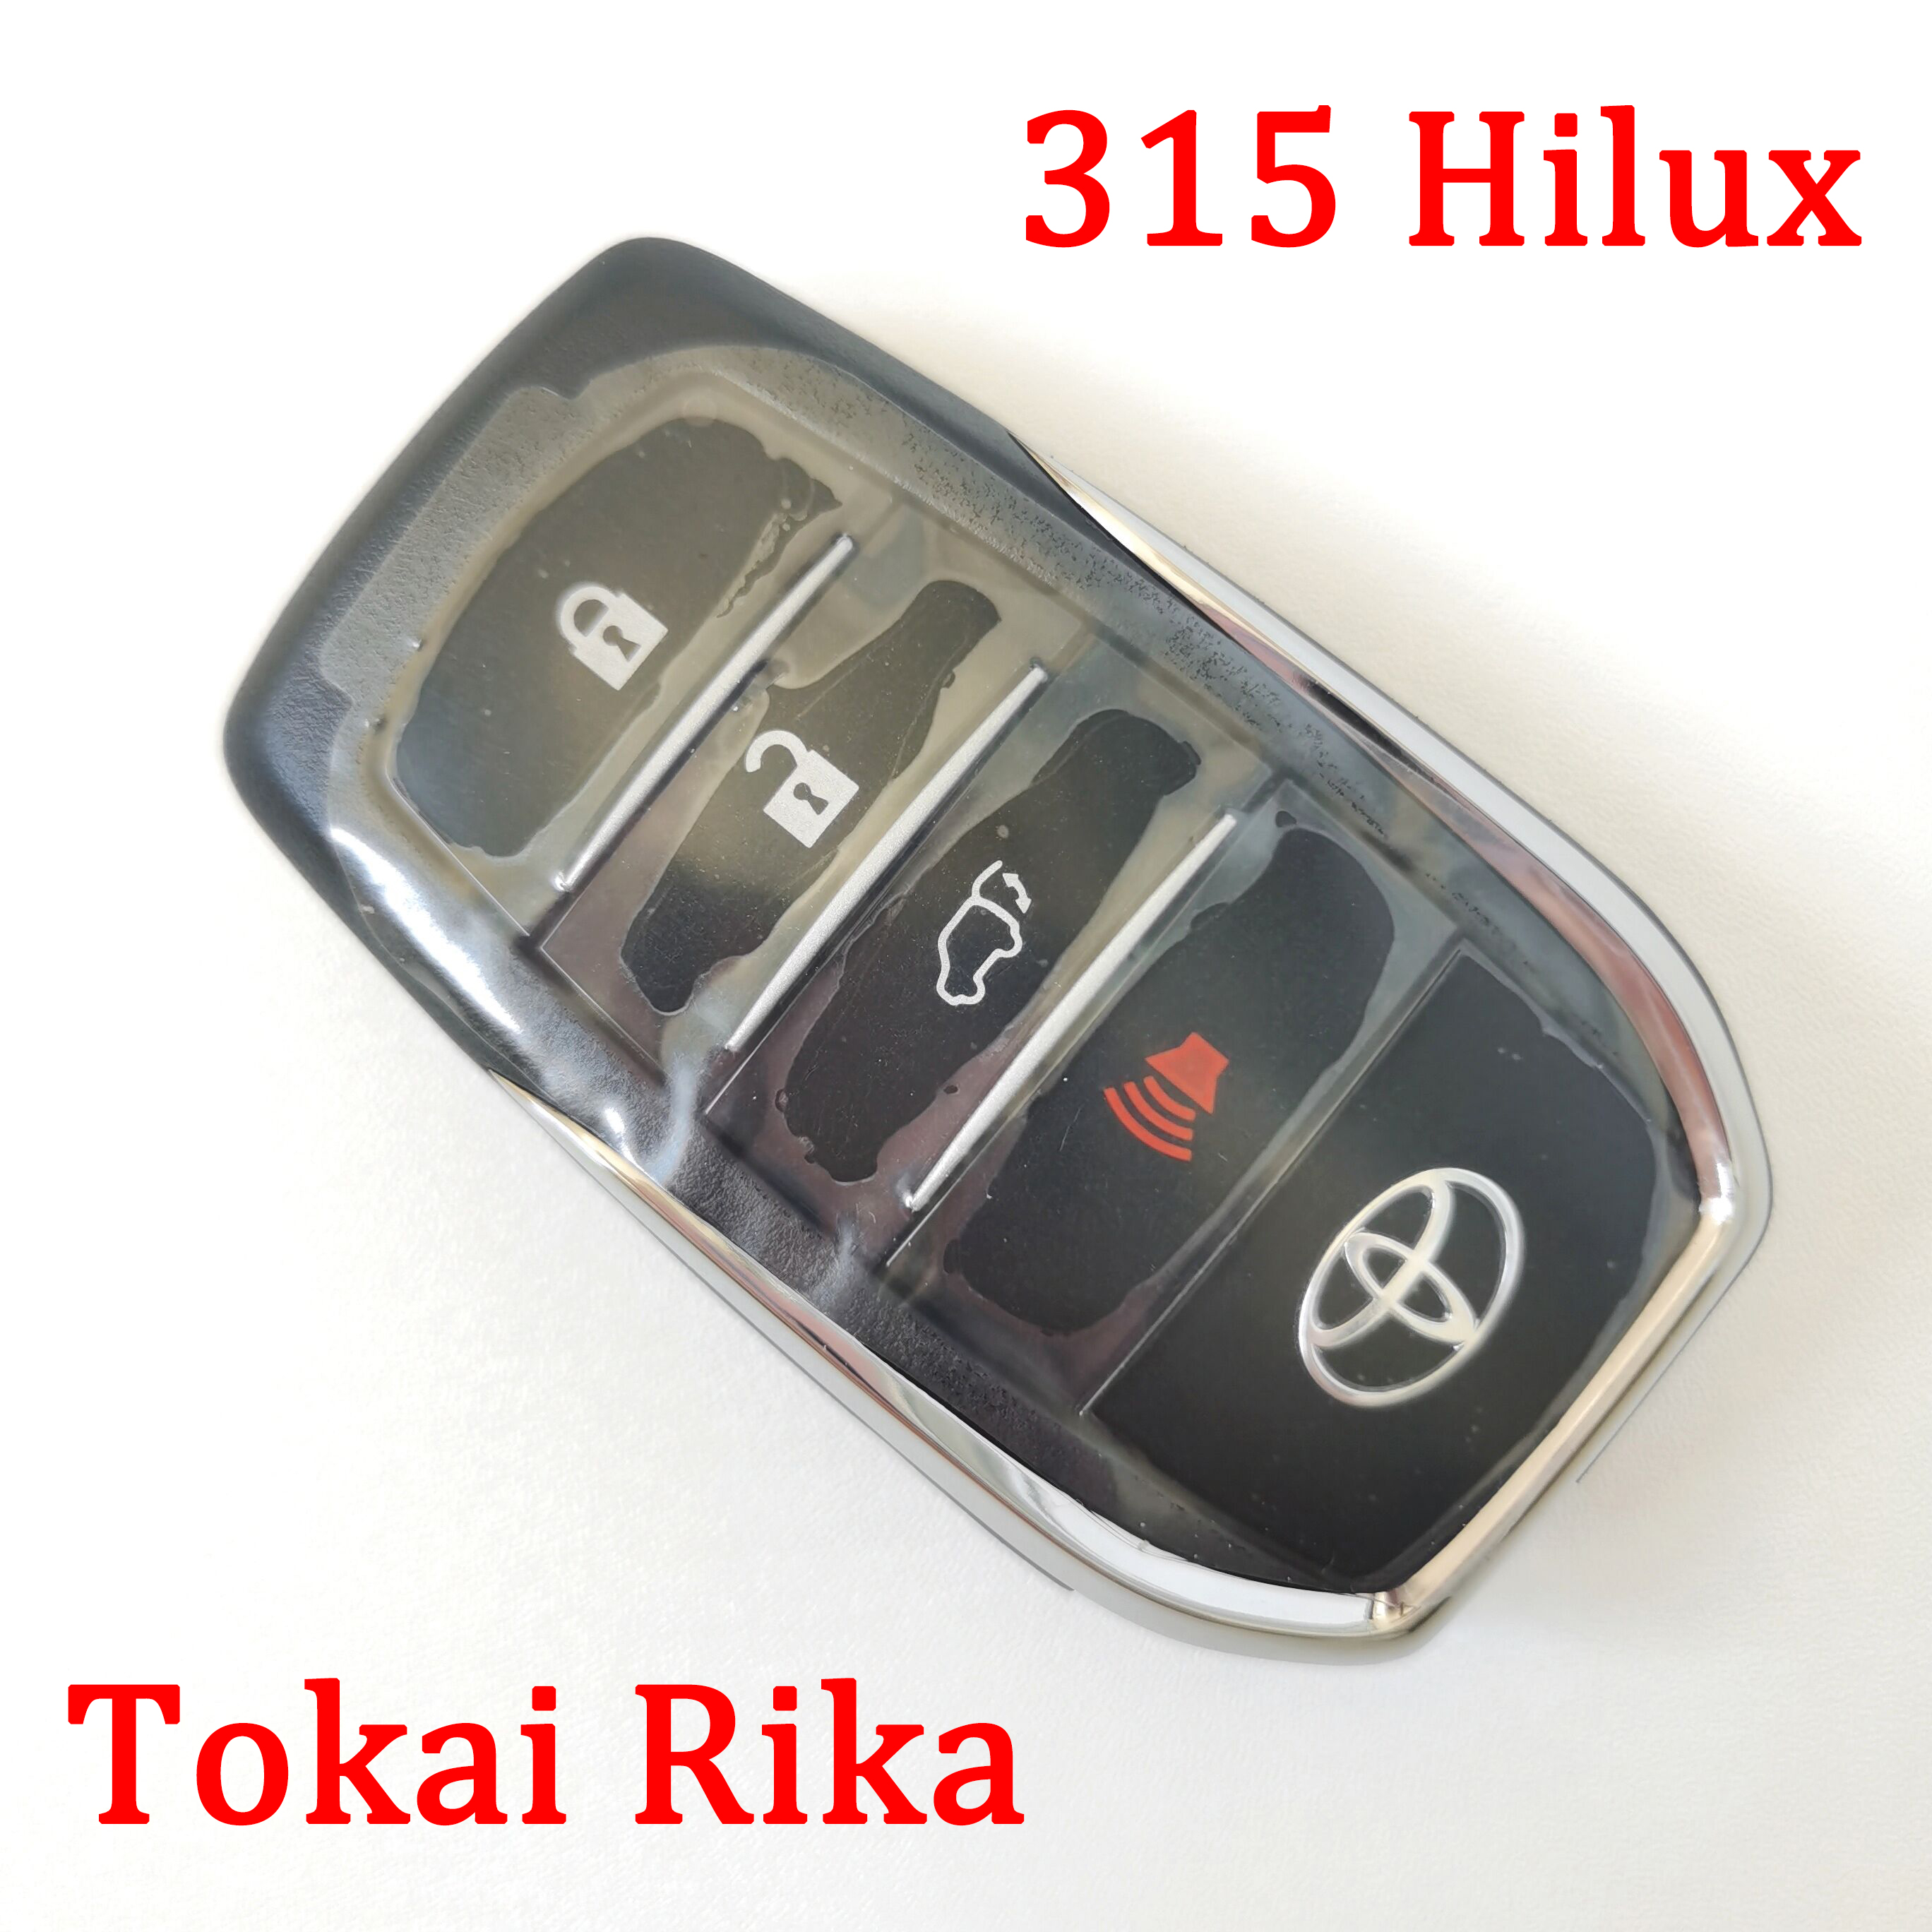 Original 3+1 Buttons 315 MHz Smart Key for Toyota Hilux - B3U2K2L Tokai Rika